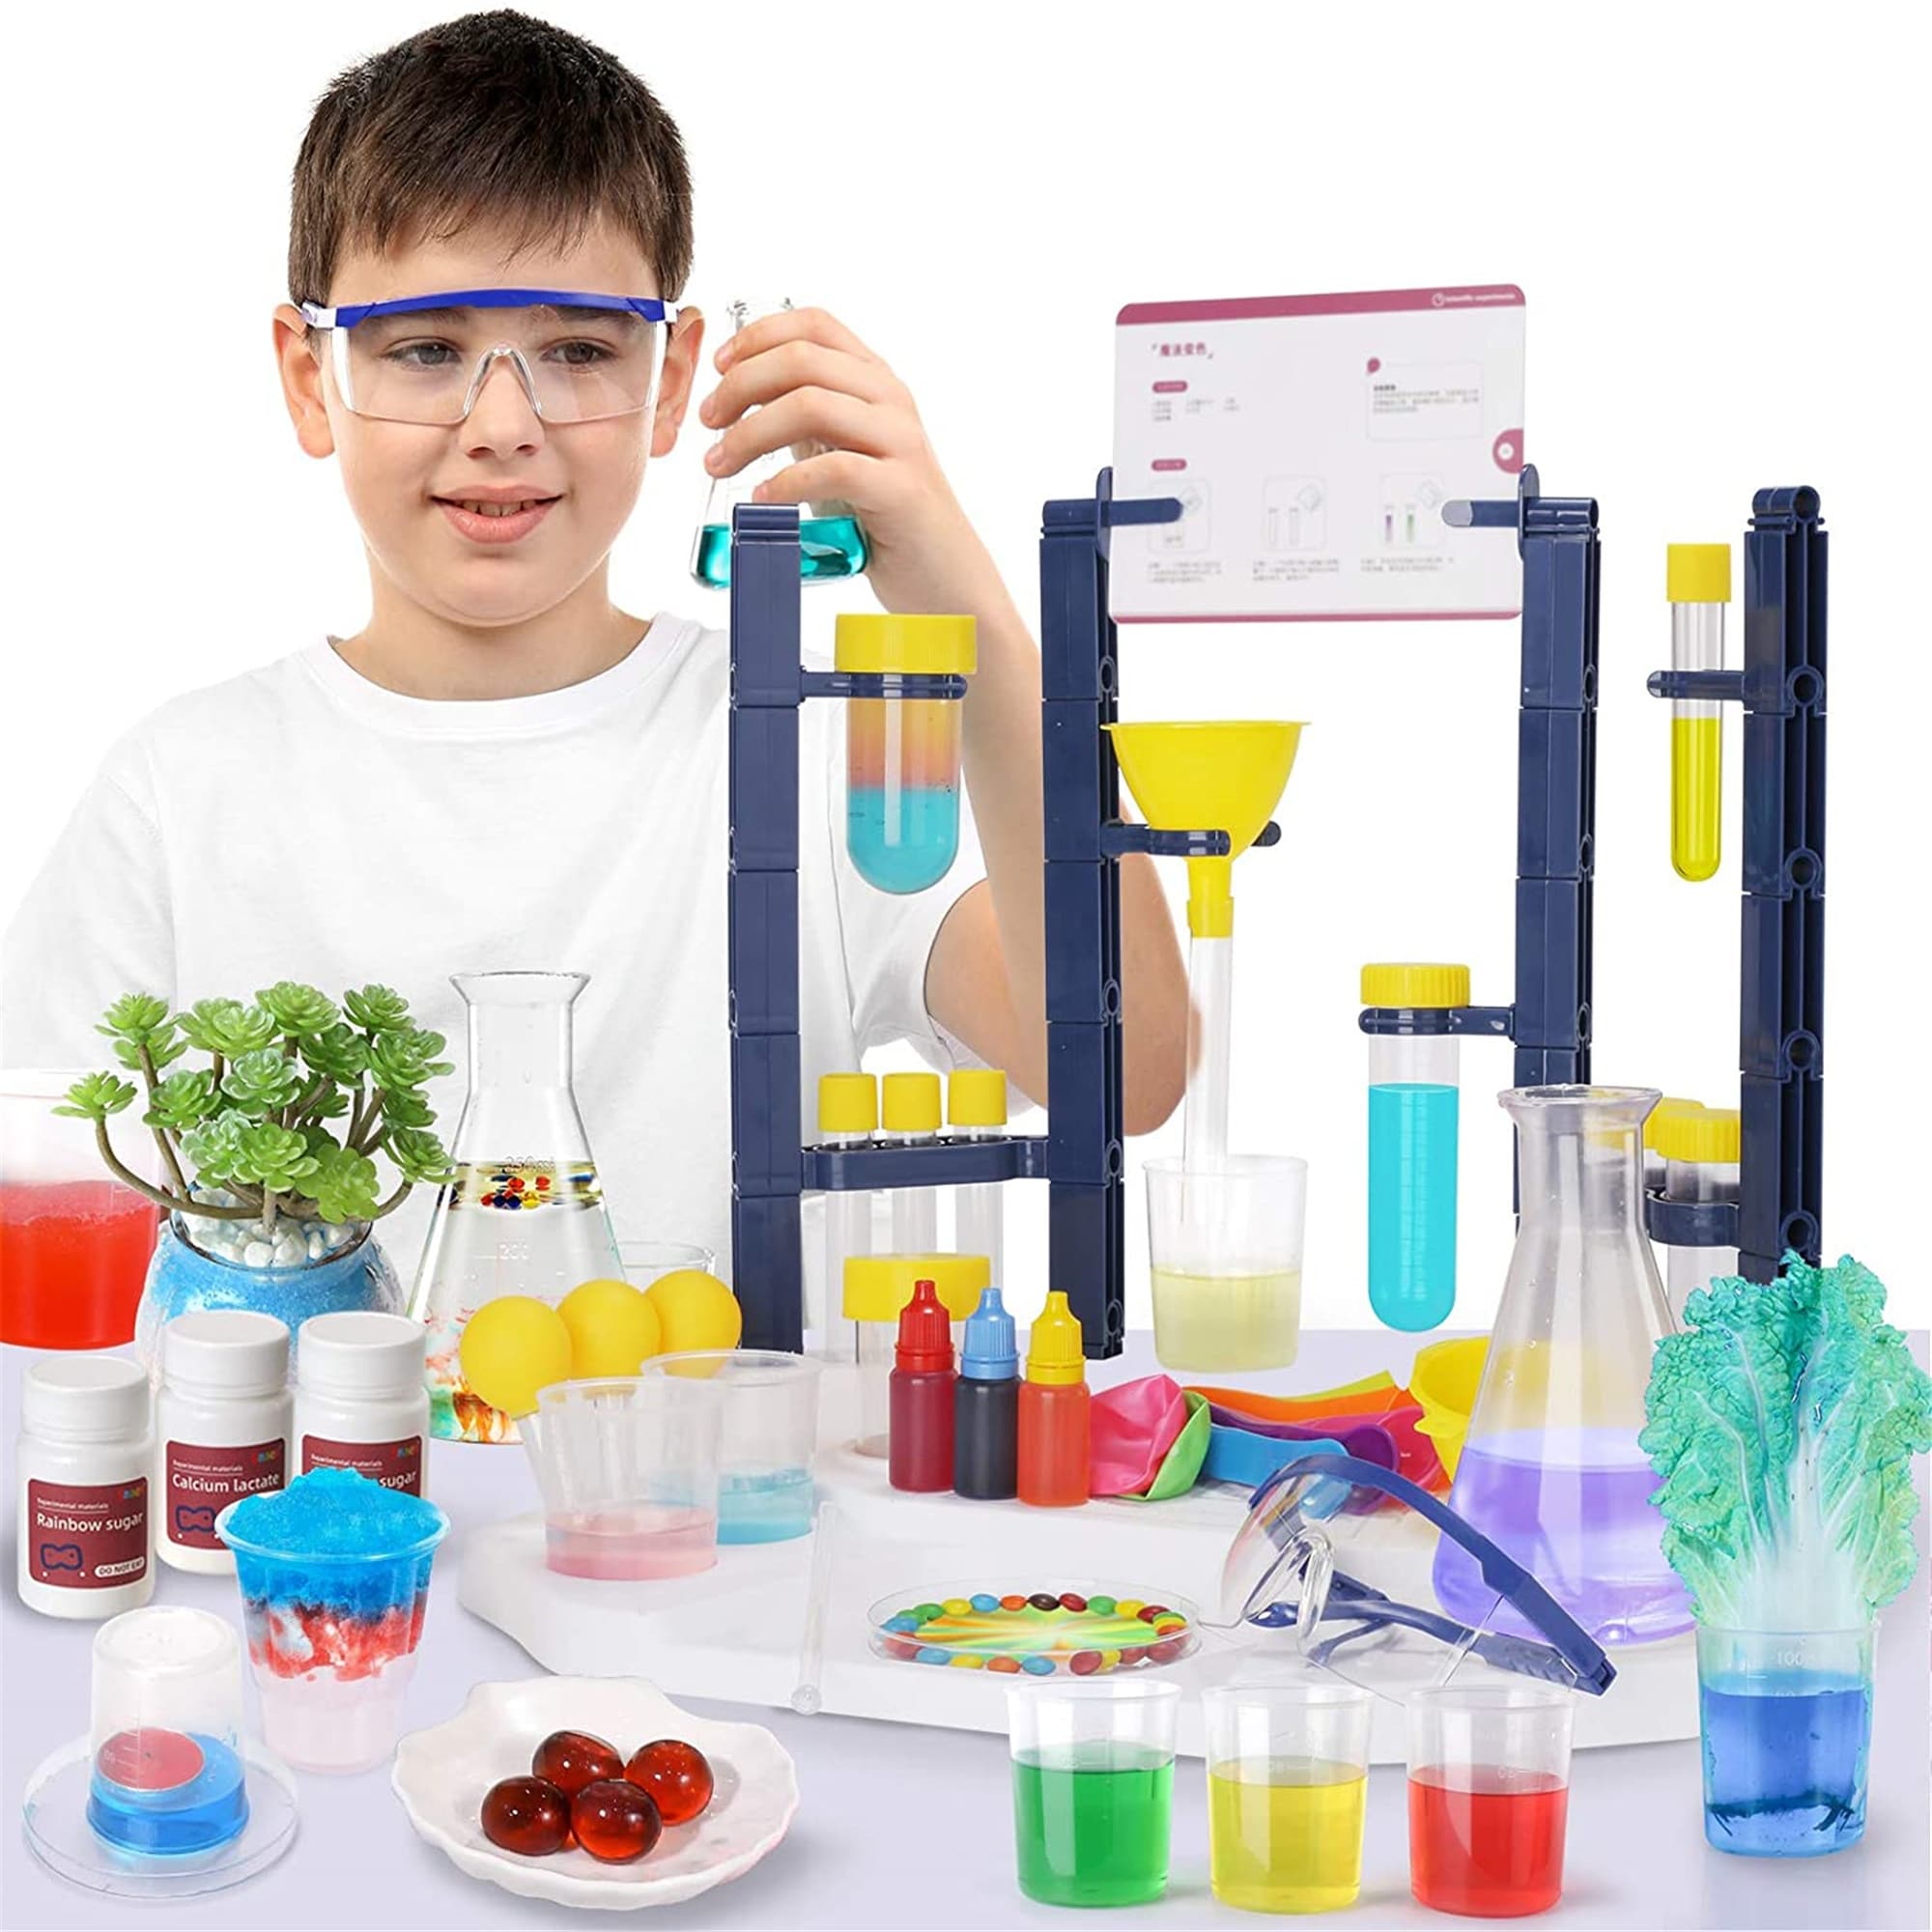 Kids Chemistry Kit Play Science Lab Stem Toys Pretend Play for